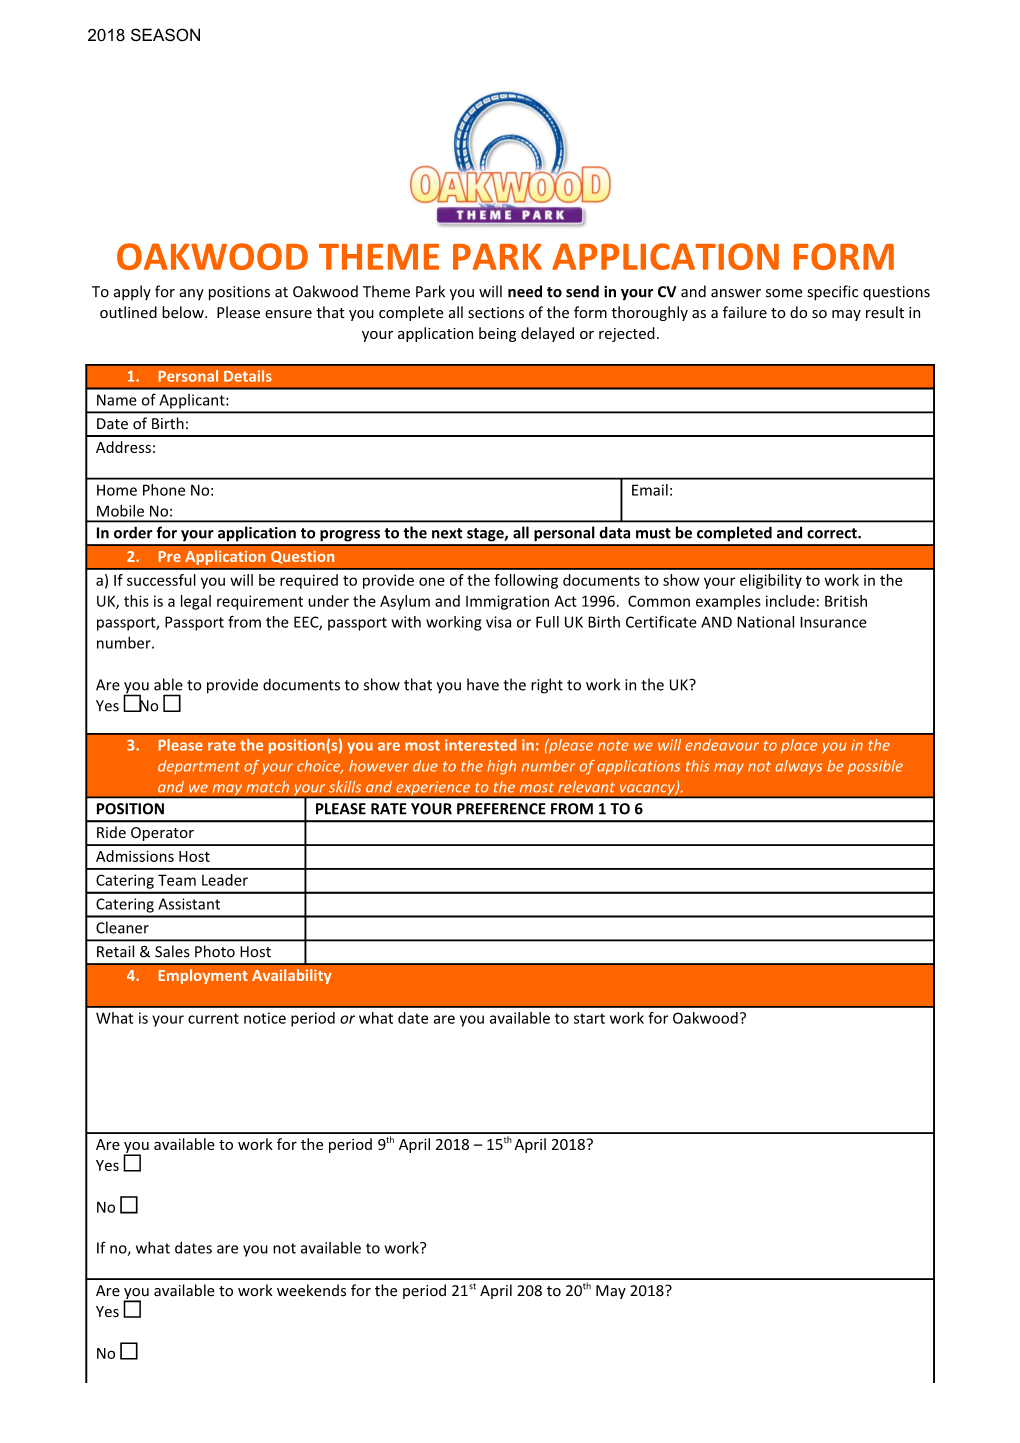 Oakwood Theme Park Application Form